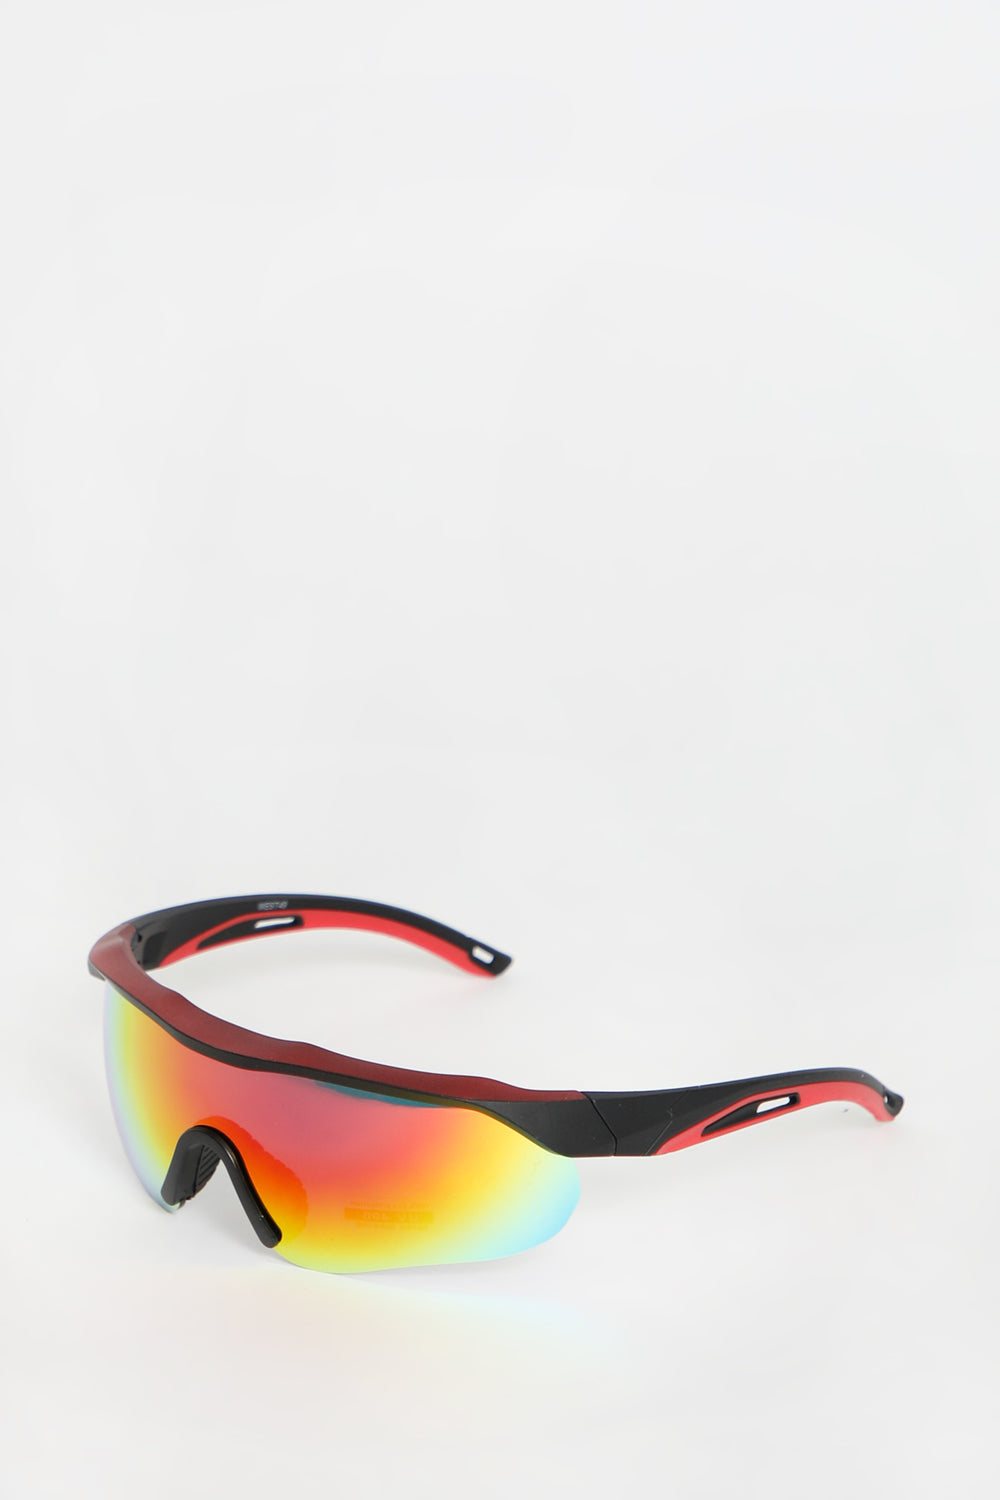 West49 Mirror Sport Sunglasses